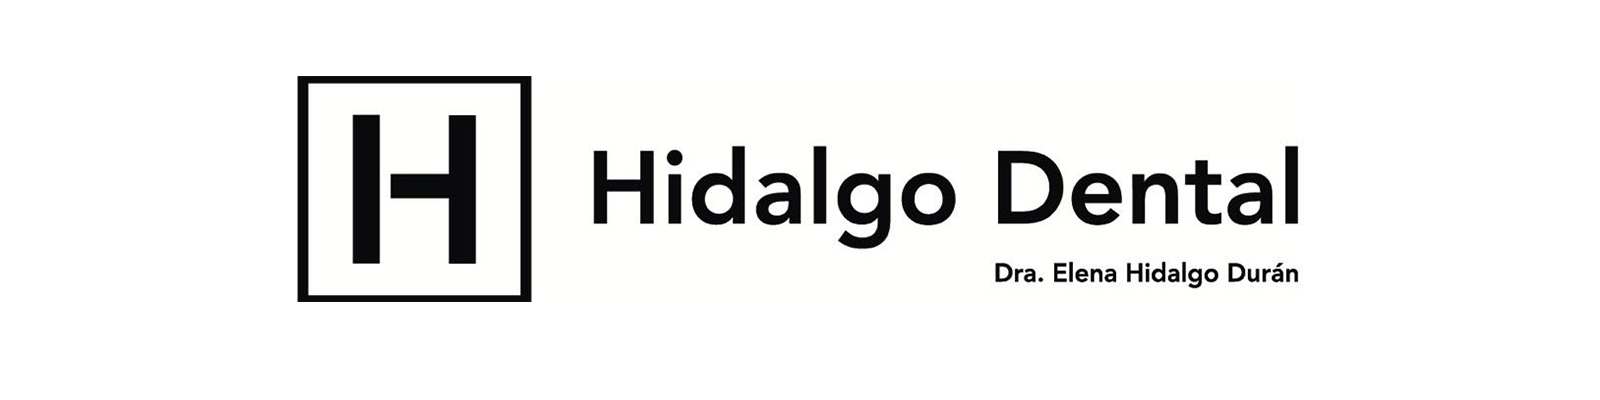 sl_hidalgo